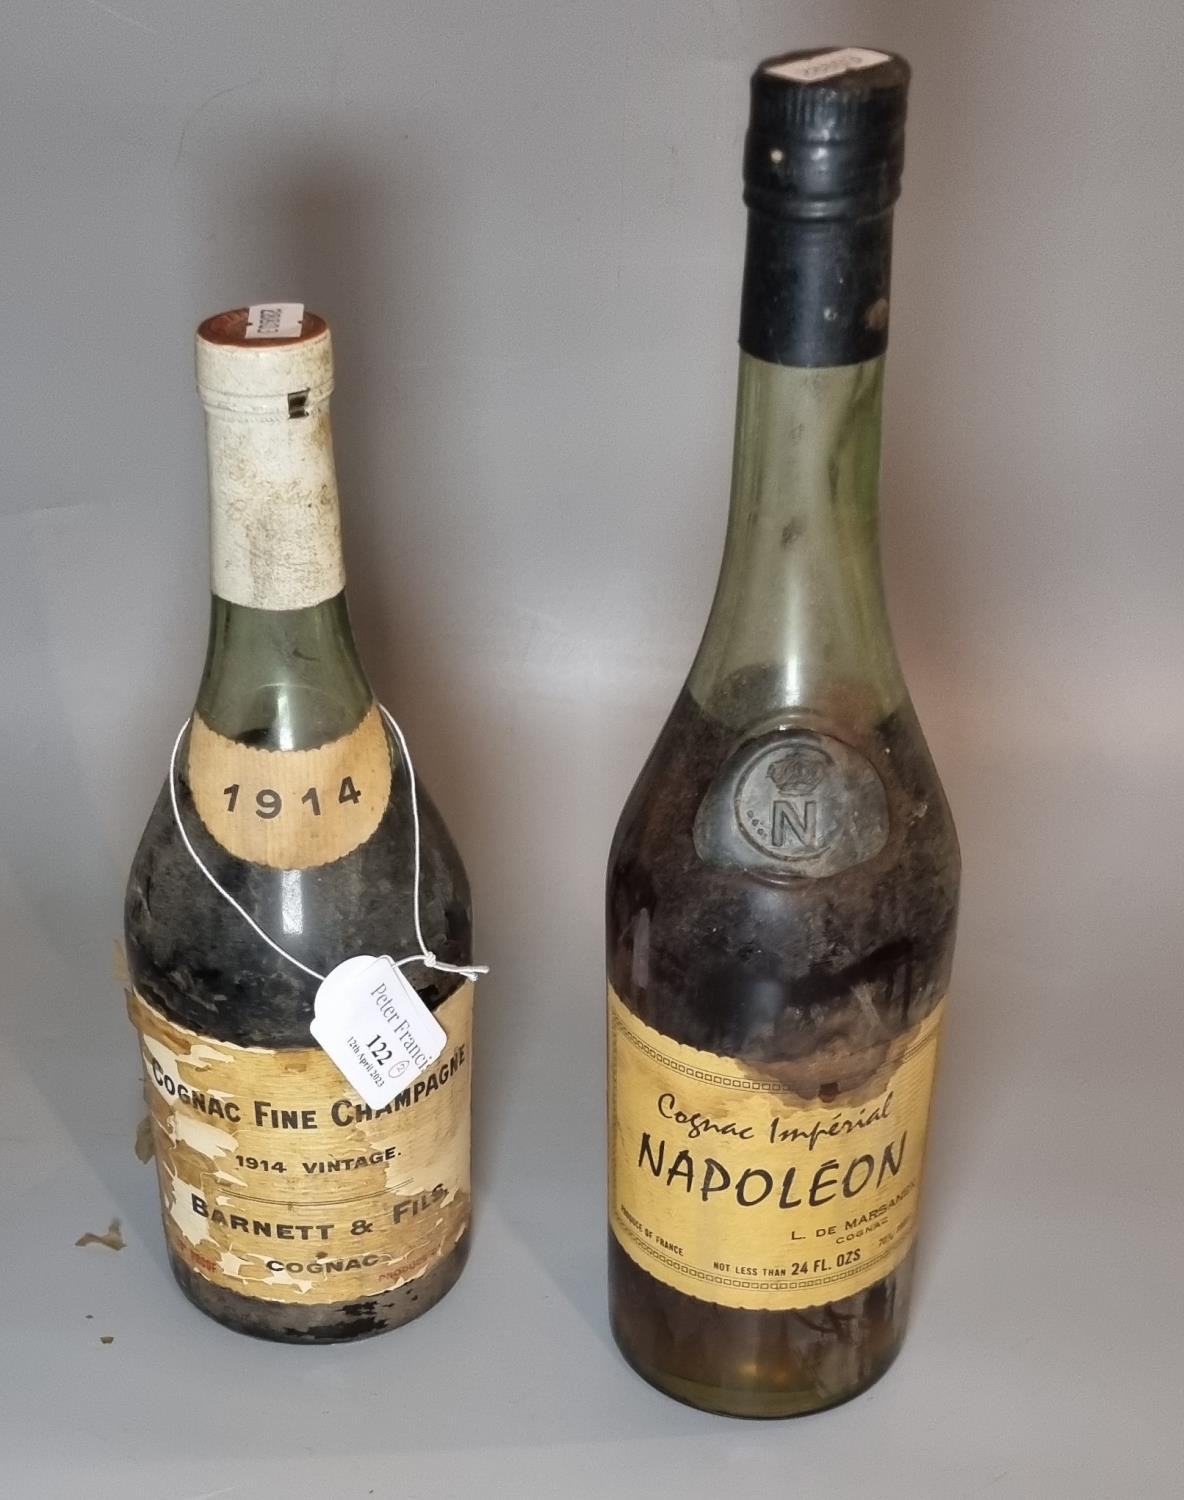 Bottle of 1914 vintage Cognac Fine Champagne, Barnett & Fils together with a Napoleon Cognac